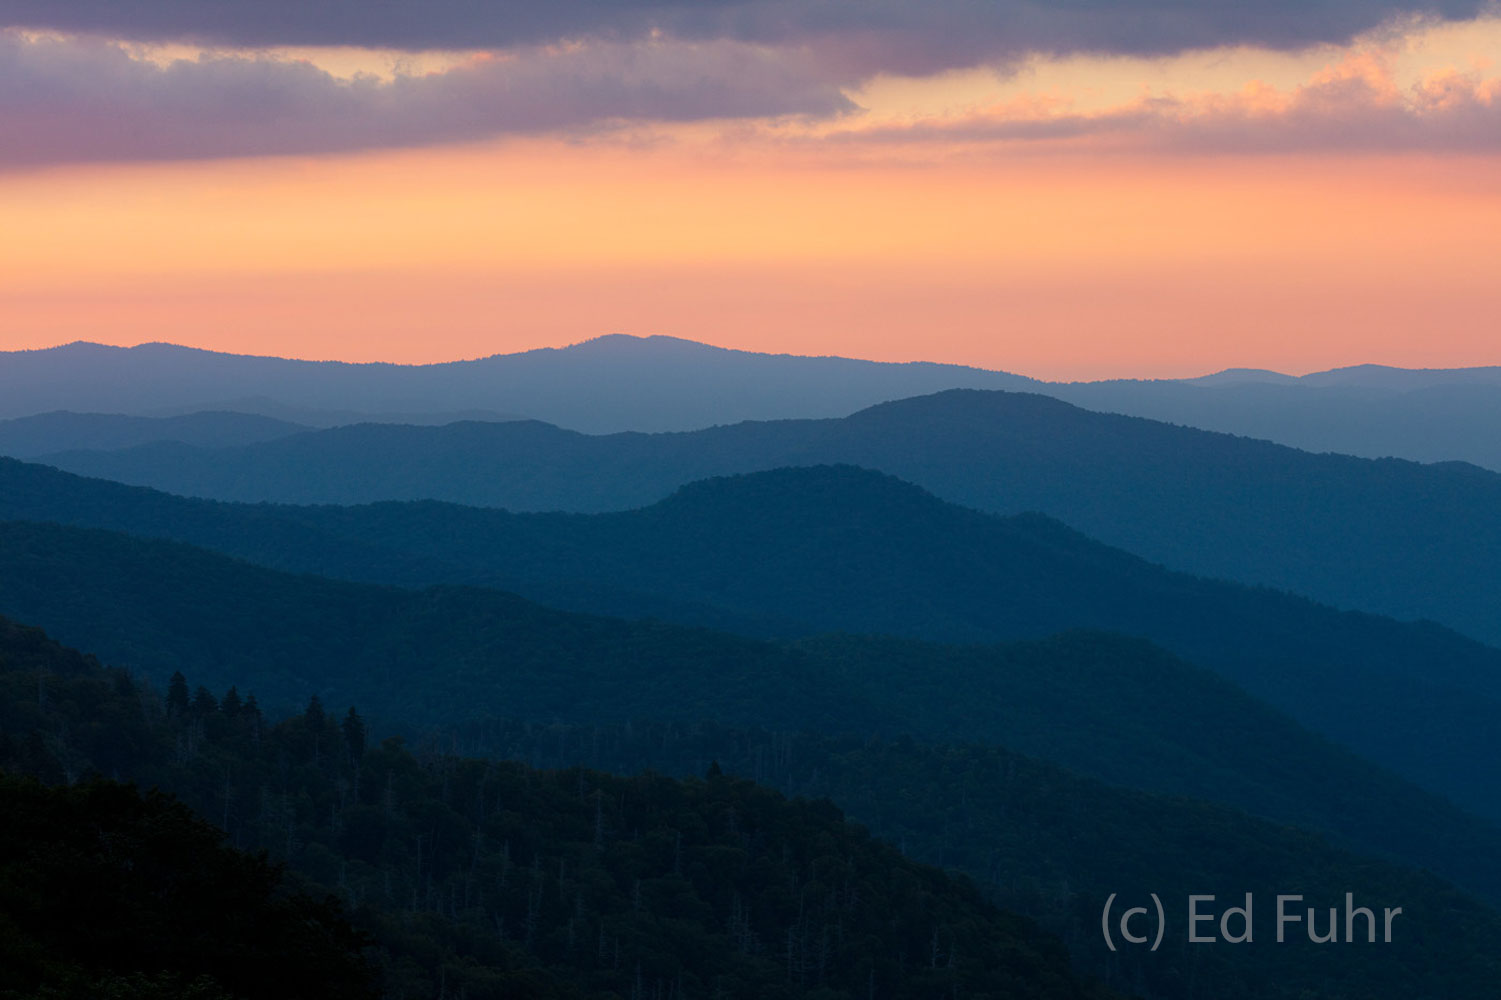 Mountain ridges recede below dusk's final curtain call.